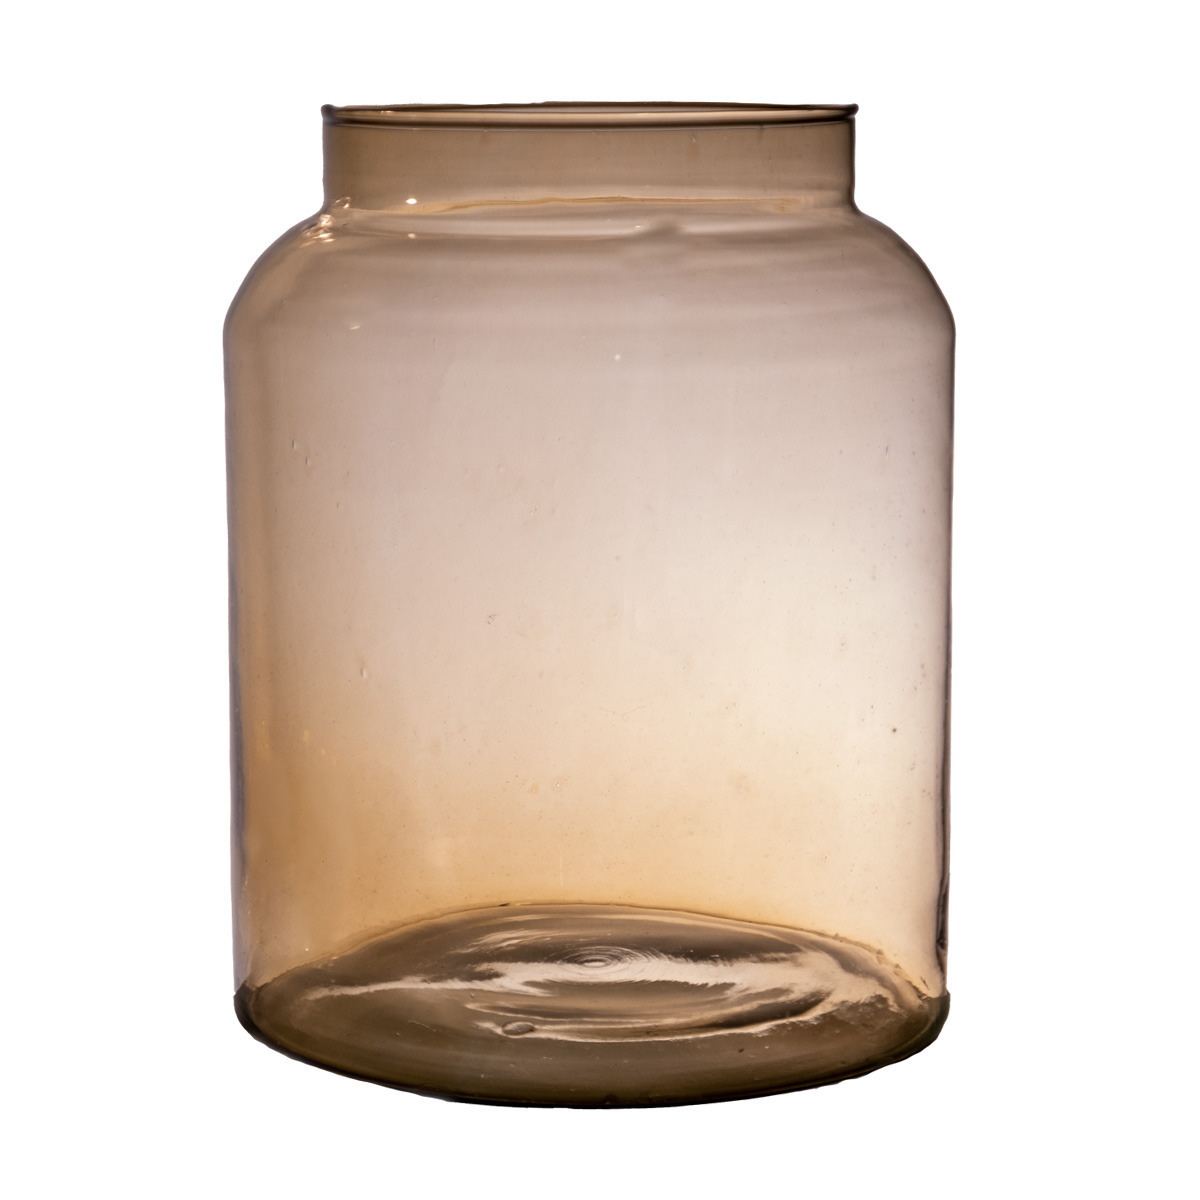 Hakbijl Glass Bloemenvaas Shape transparant amber eco glas D19 x H25 cm Melkbus vaas